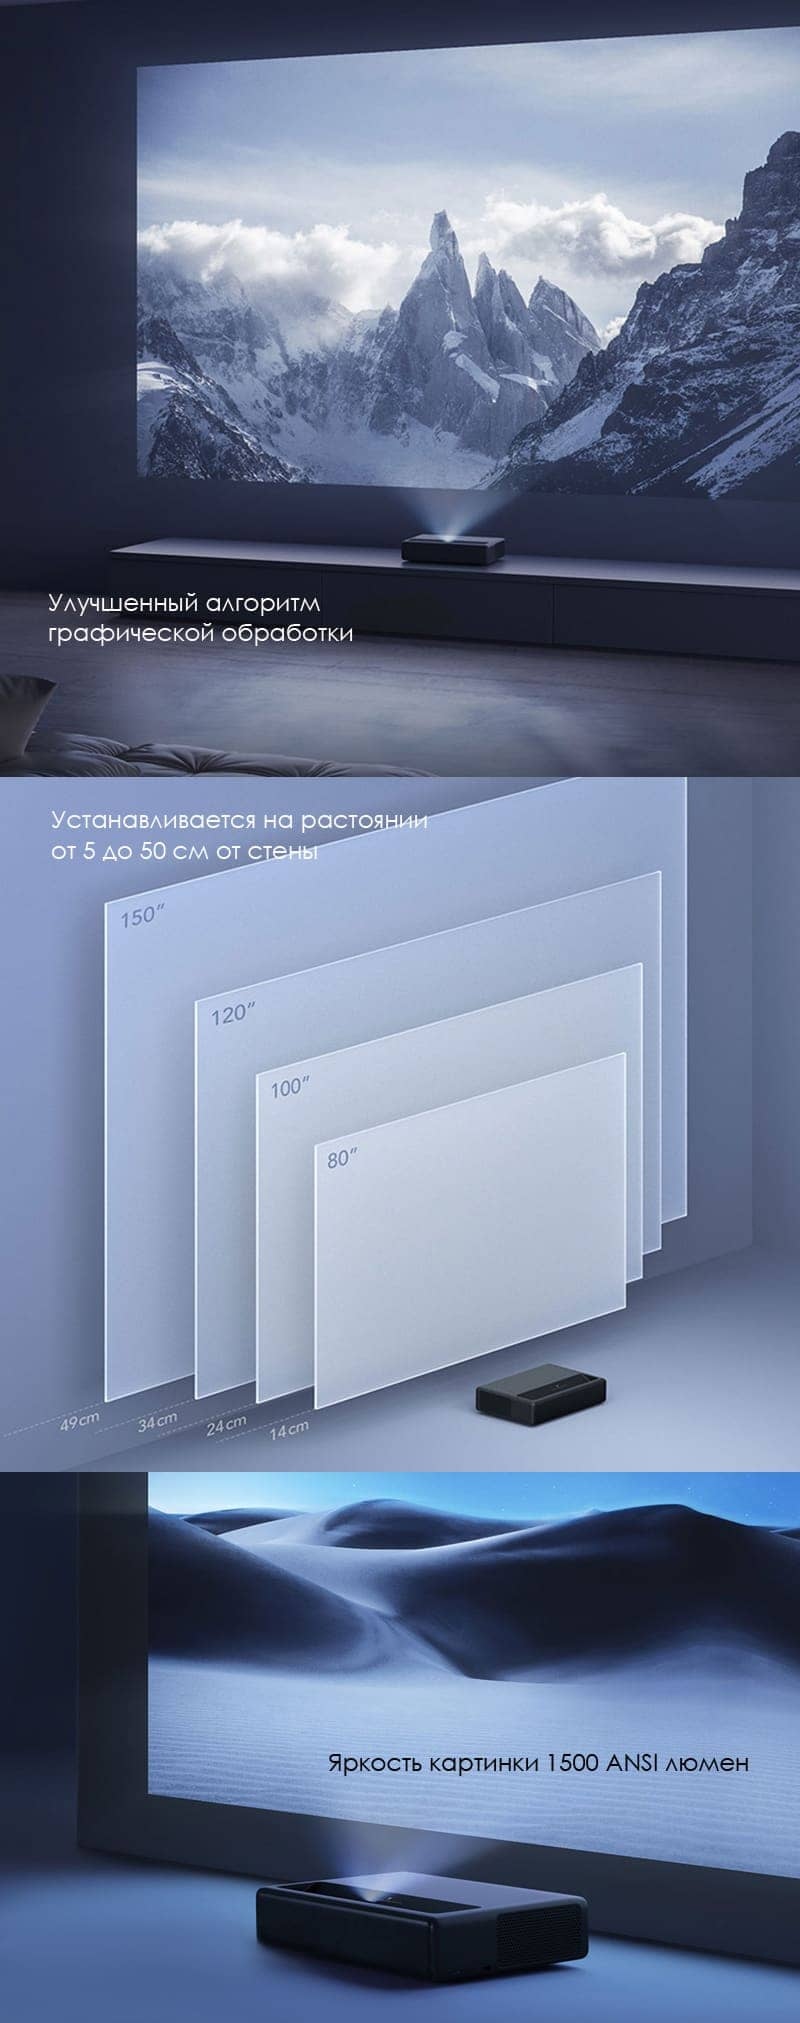 Xiaomi MiJia Laser Projection 4K